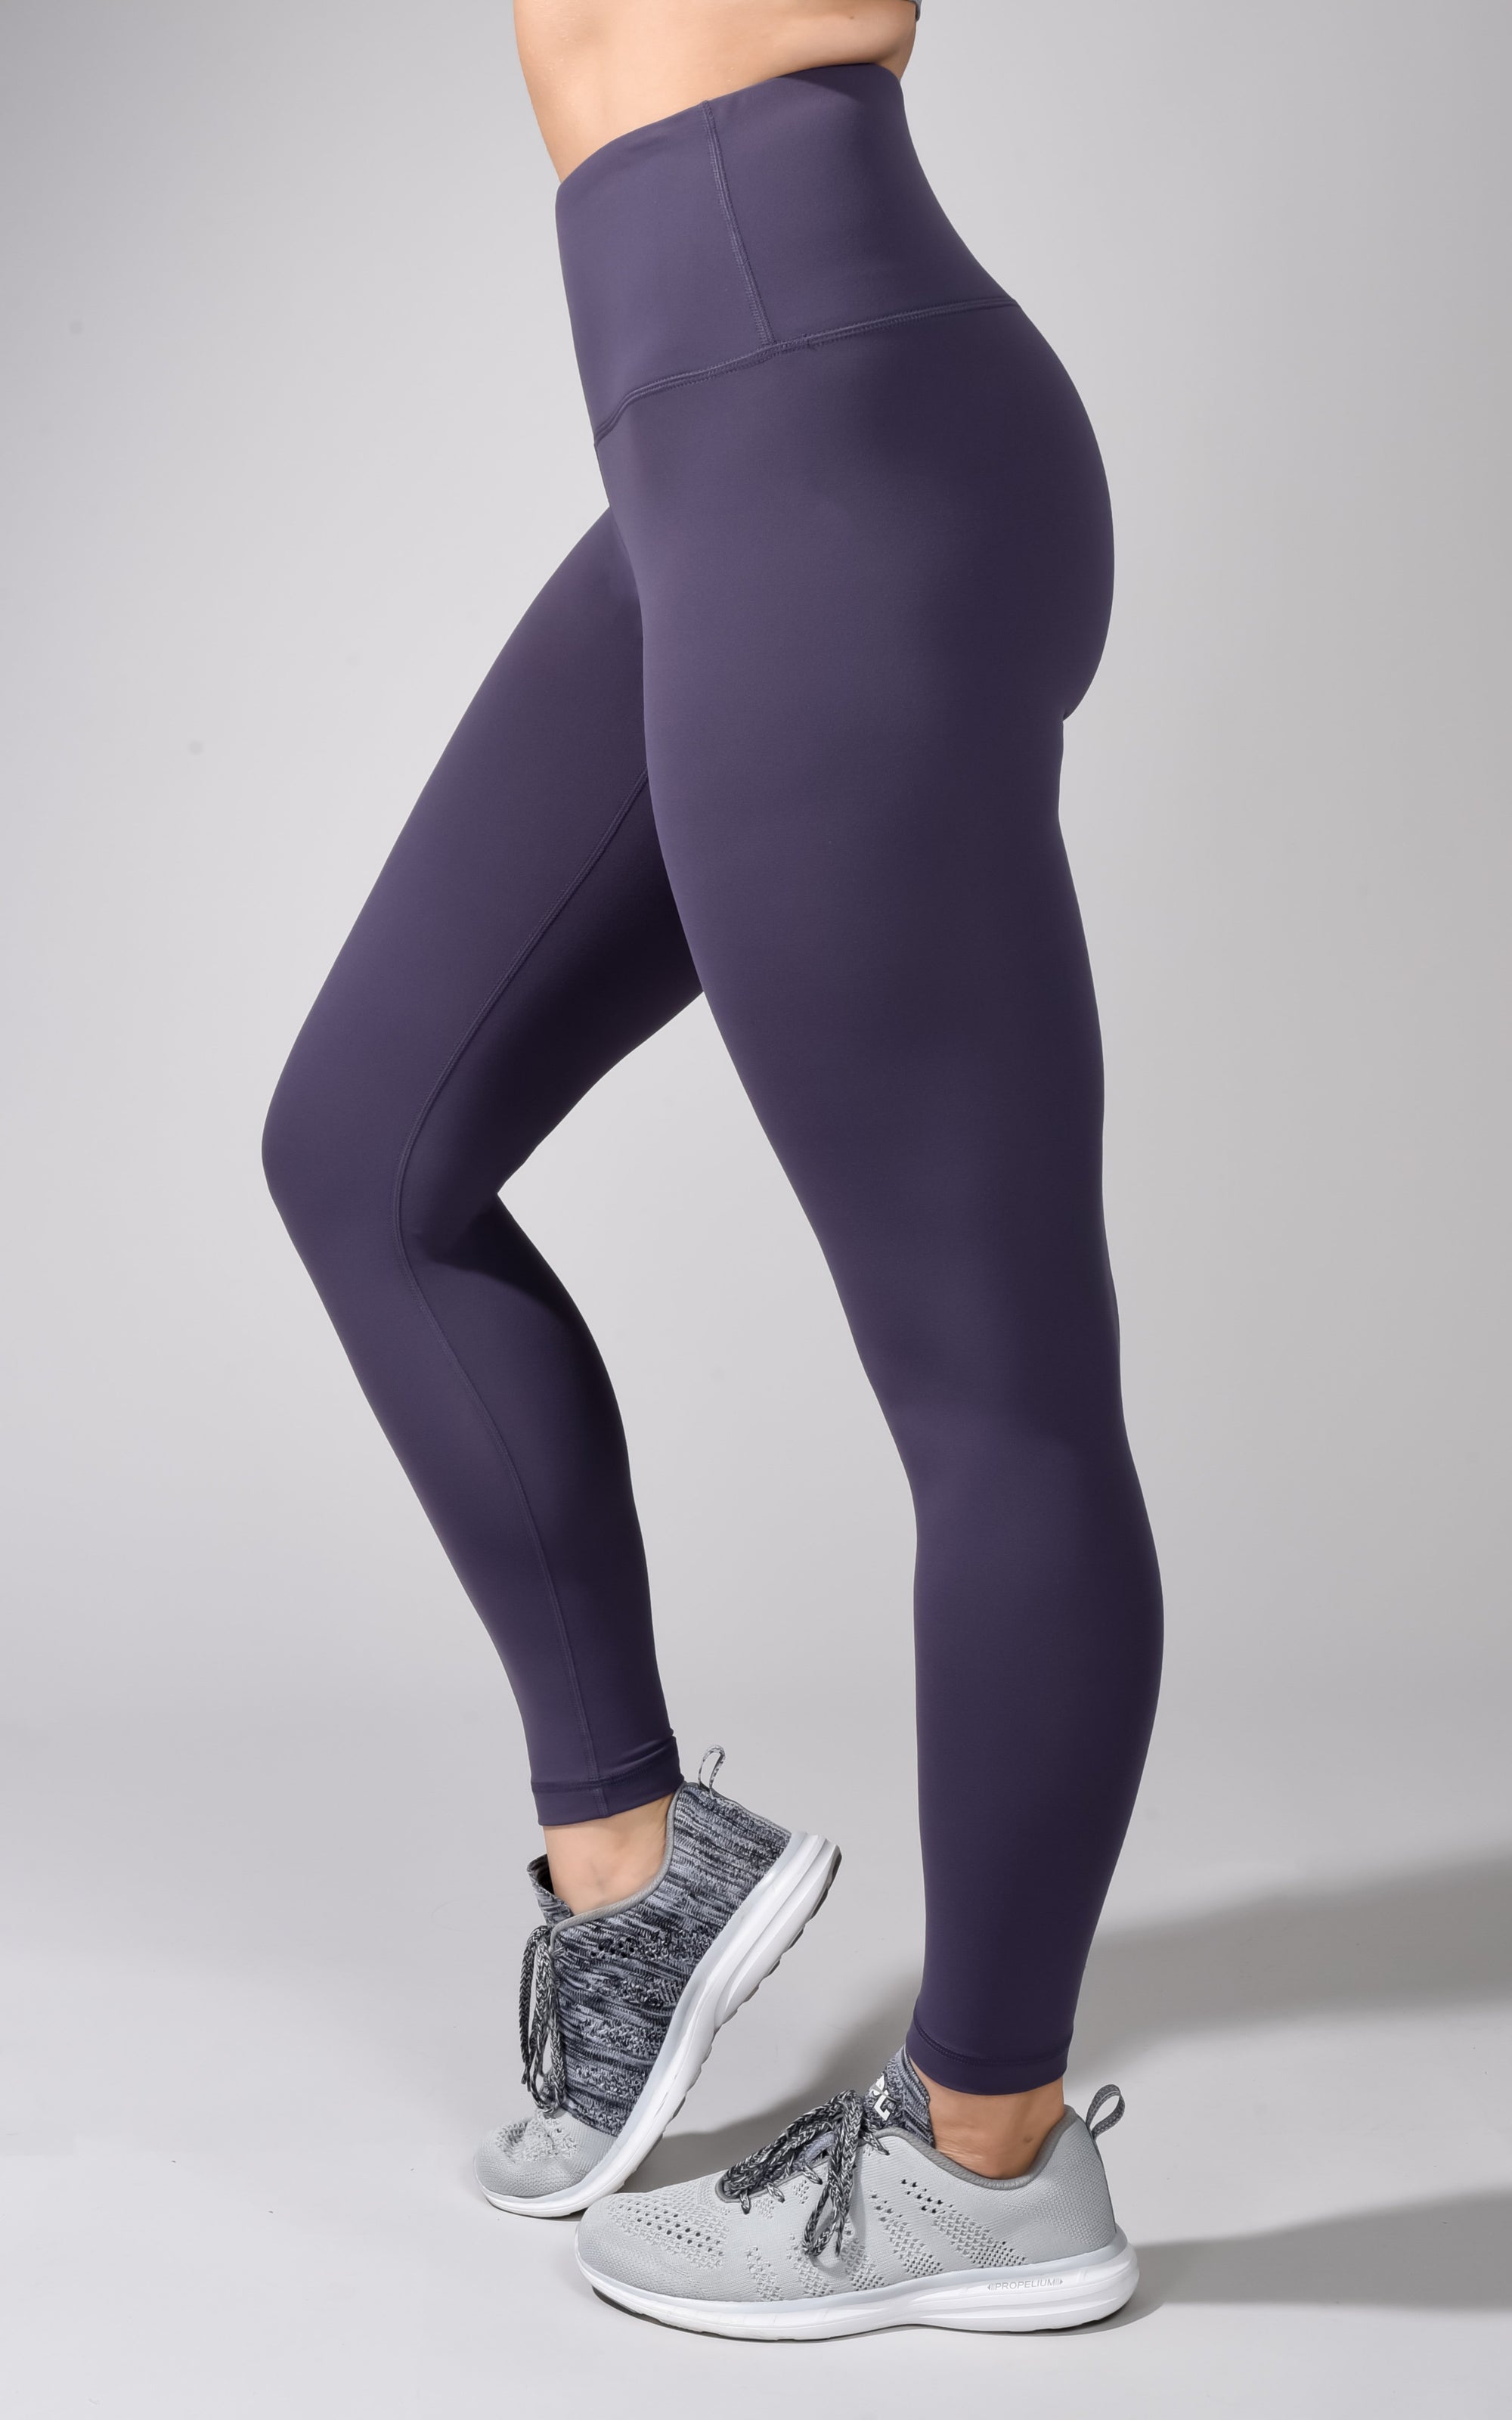 Yogalicious Lux Leggings Yoga Pants Women's Medium Gym Workout 144527 NWOT  